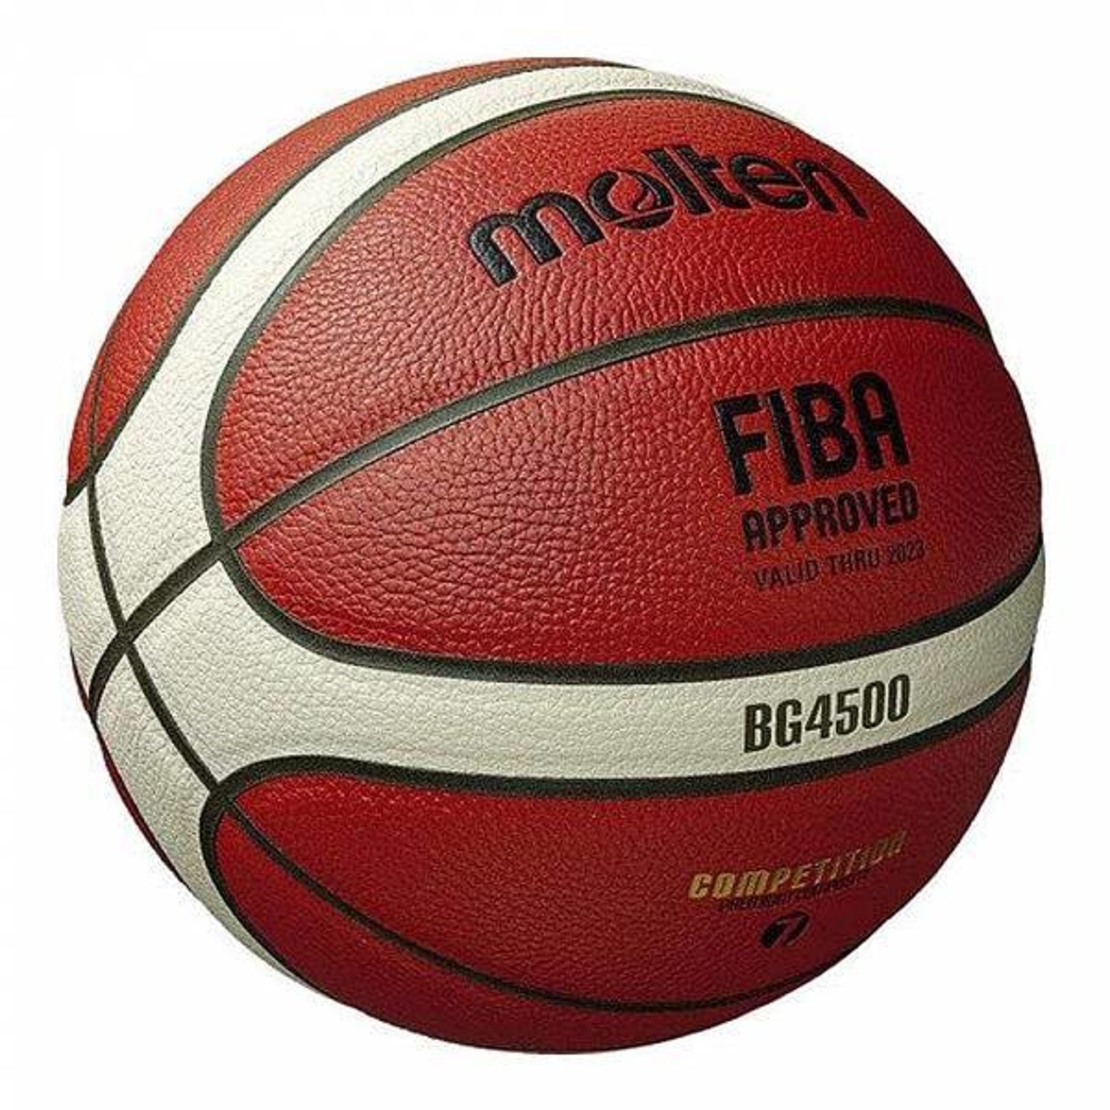 כדור כדורסל עור מידה 7 מולטן Molten BG4500